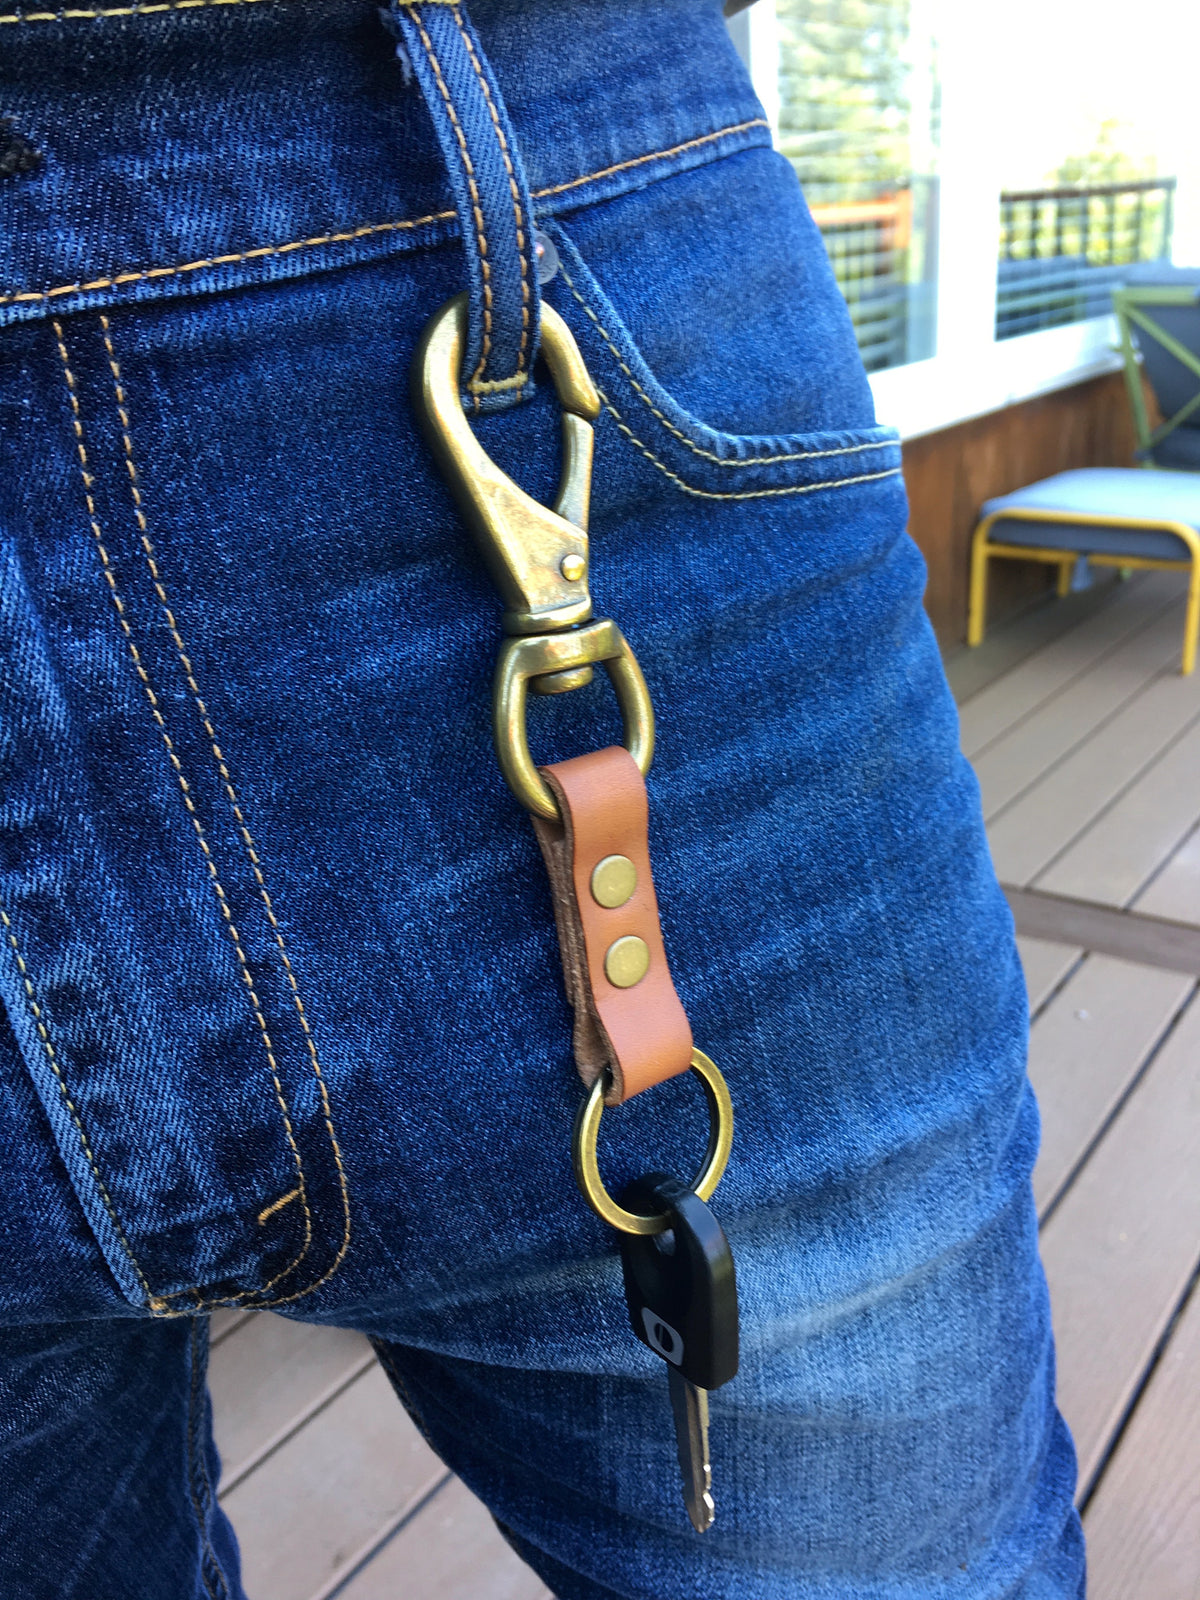 the swivel clip key chain-